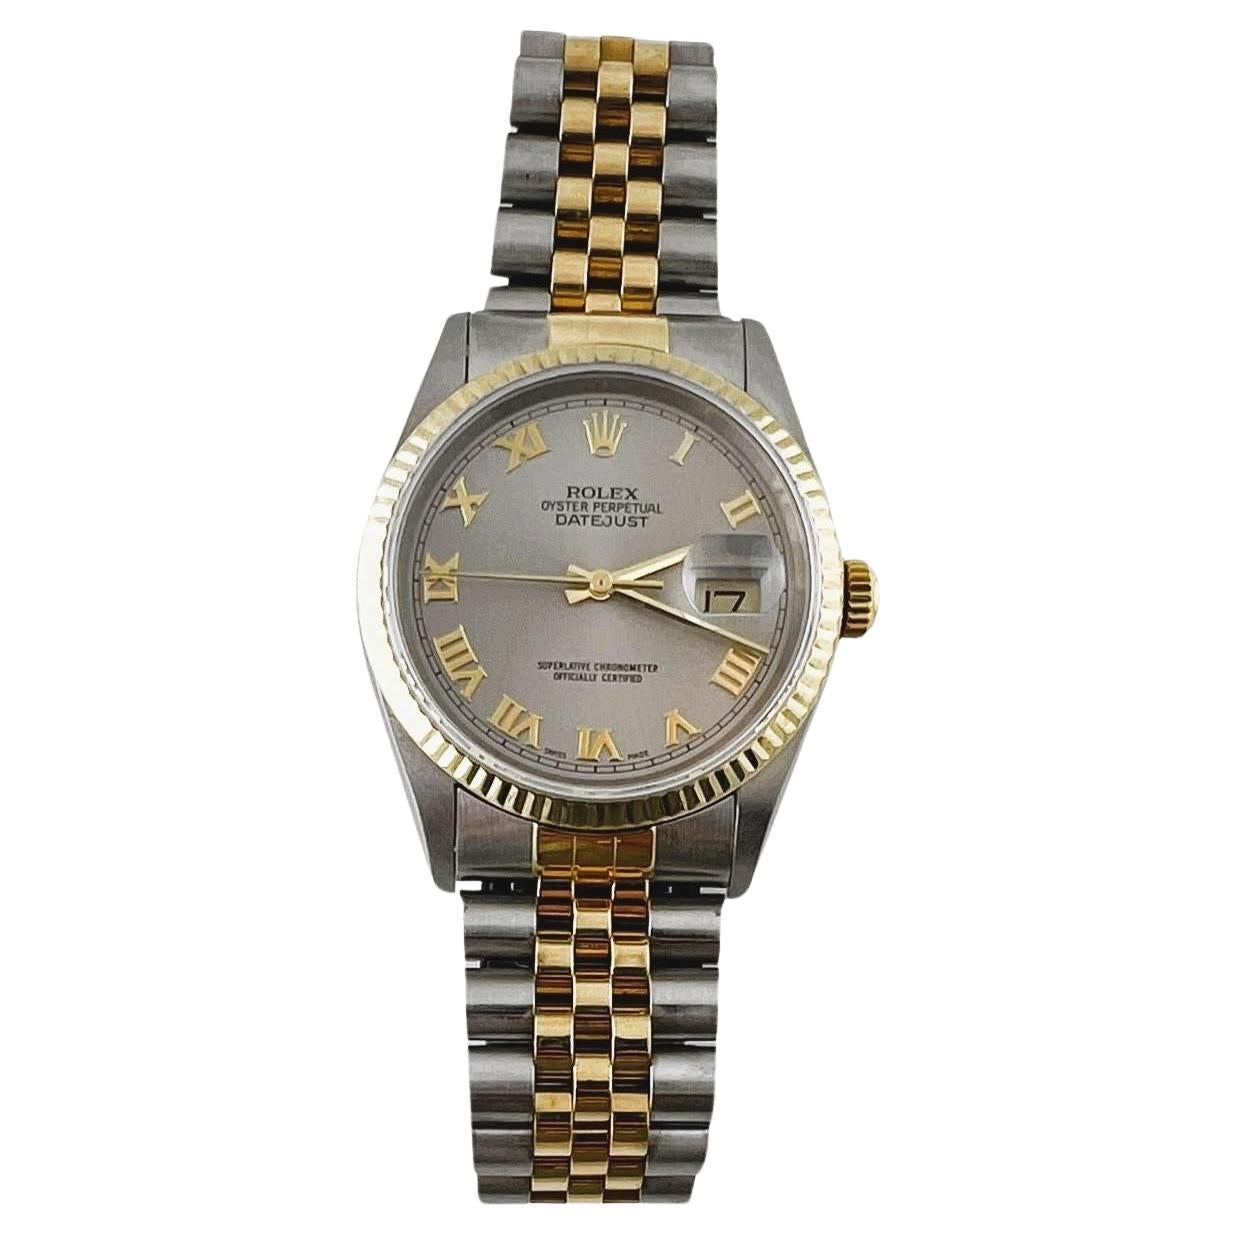 2000 Rolex Men's Datejust 16203 Two Tone Watch Jubilee Slate Box/Papers 